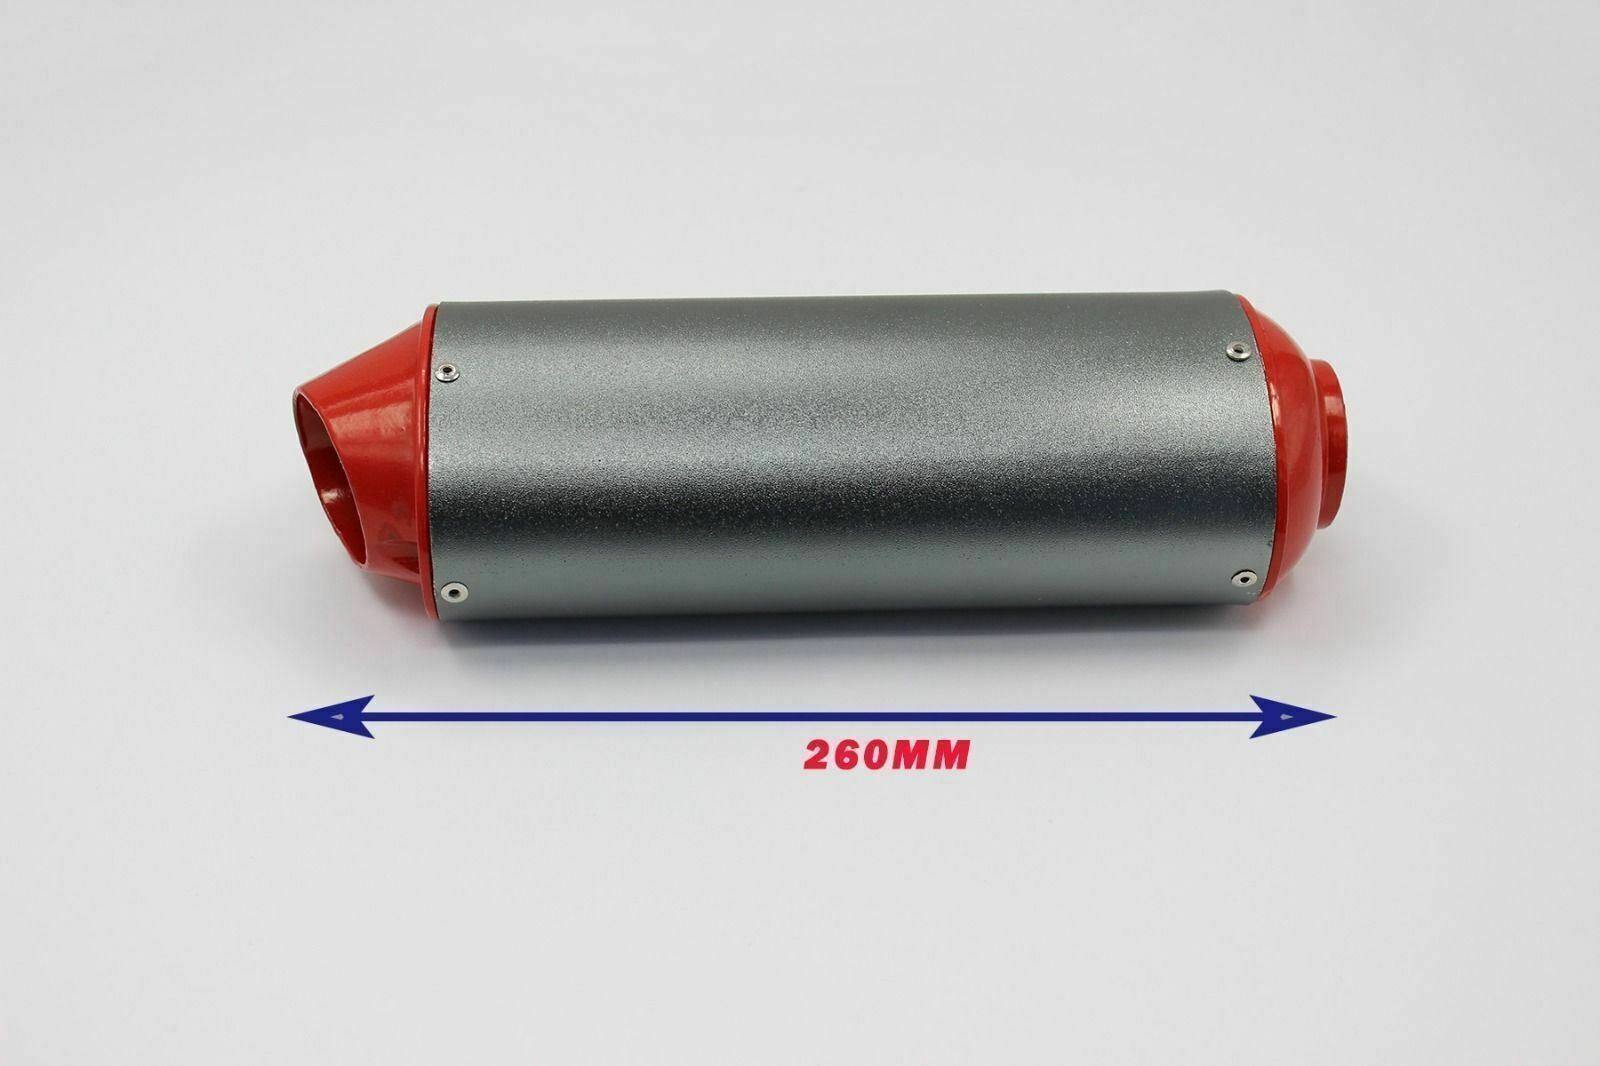 38mm Red Exhaust Muffler For Honda CRF50 125cc 140cc 150cc 160cc Dirt Bike - TDRMOTO